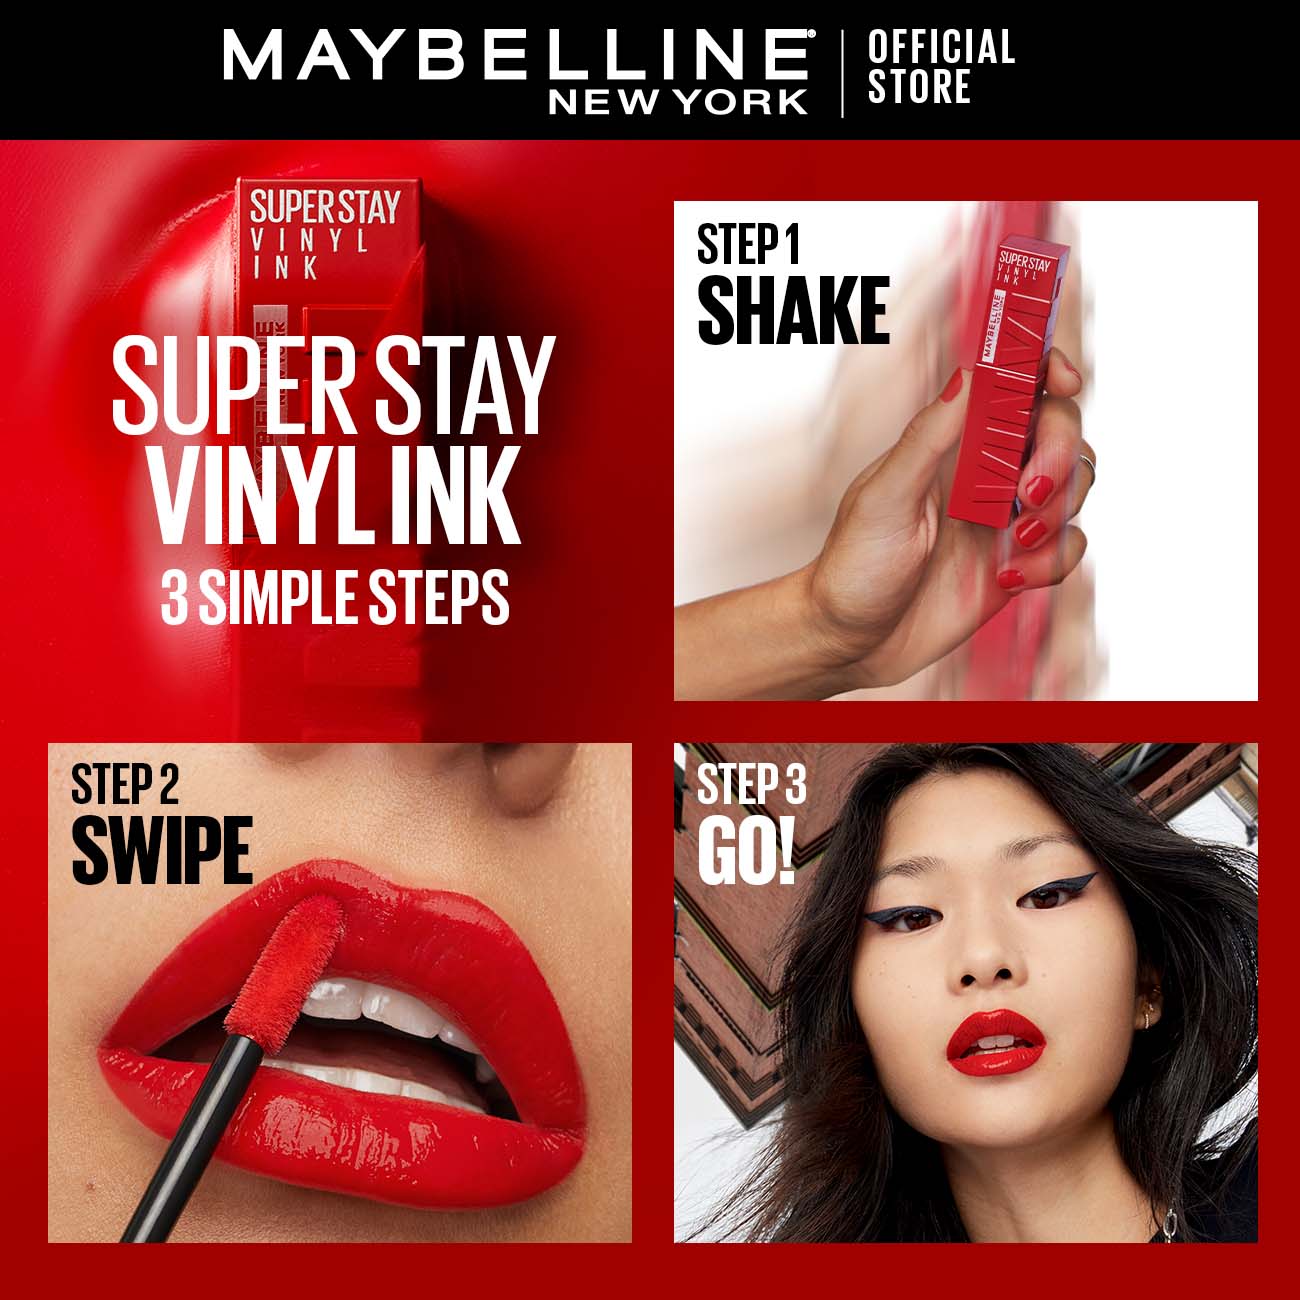 Maybelline New York Superstay Vinyl Ink - Redhot